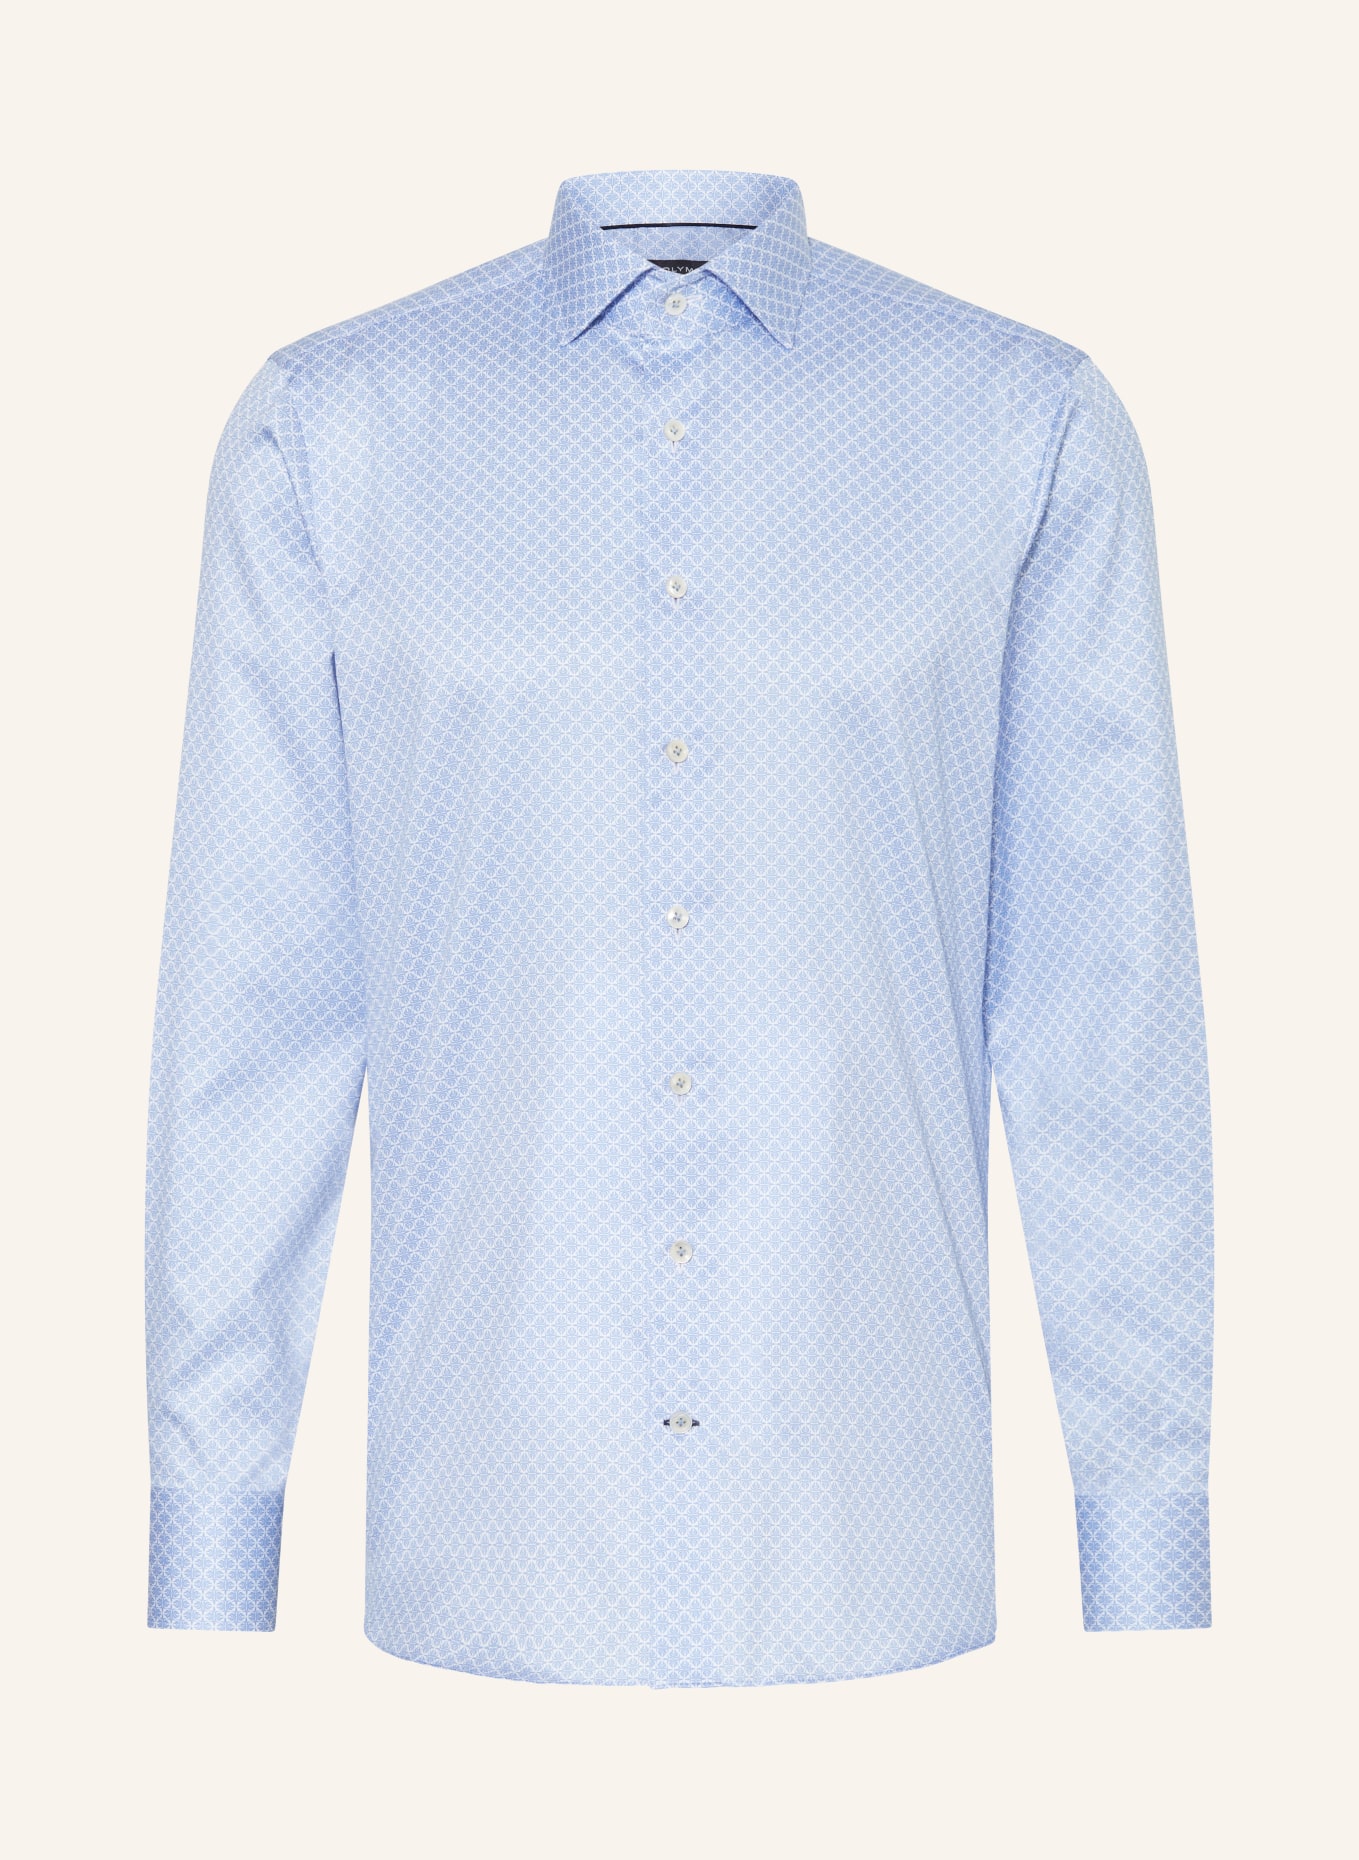 OLYMP SIGNATURE Hemd tailored fit, Farbe: HELLBLAU/ WEISS (Bild 1)